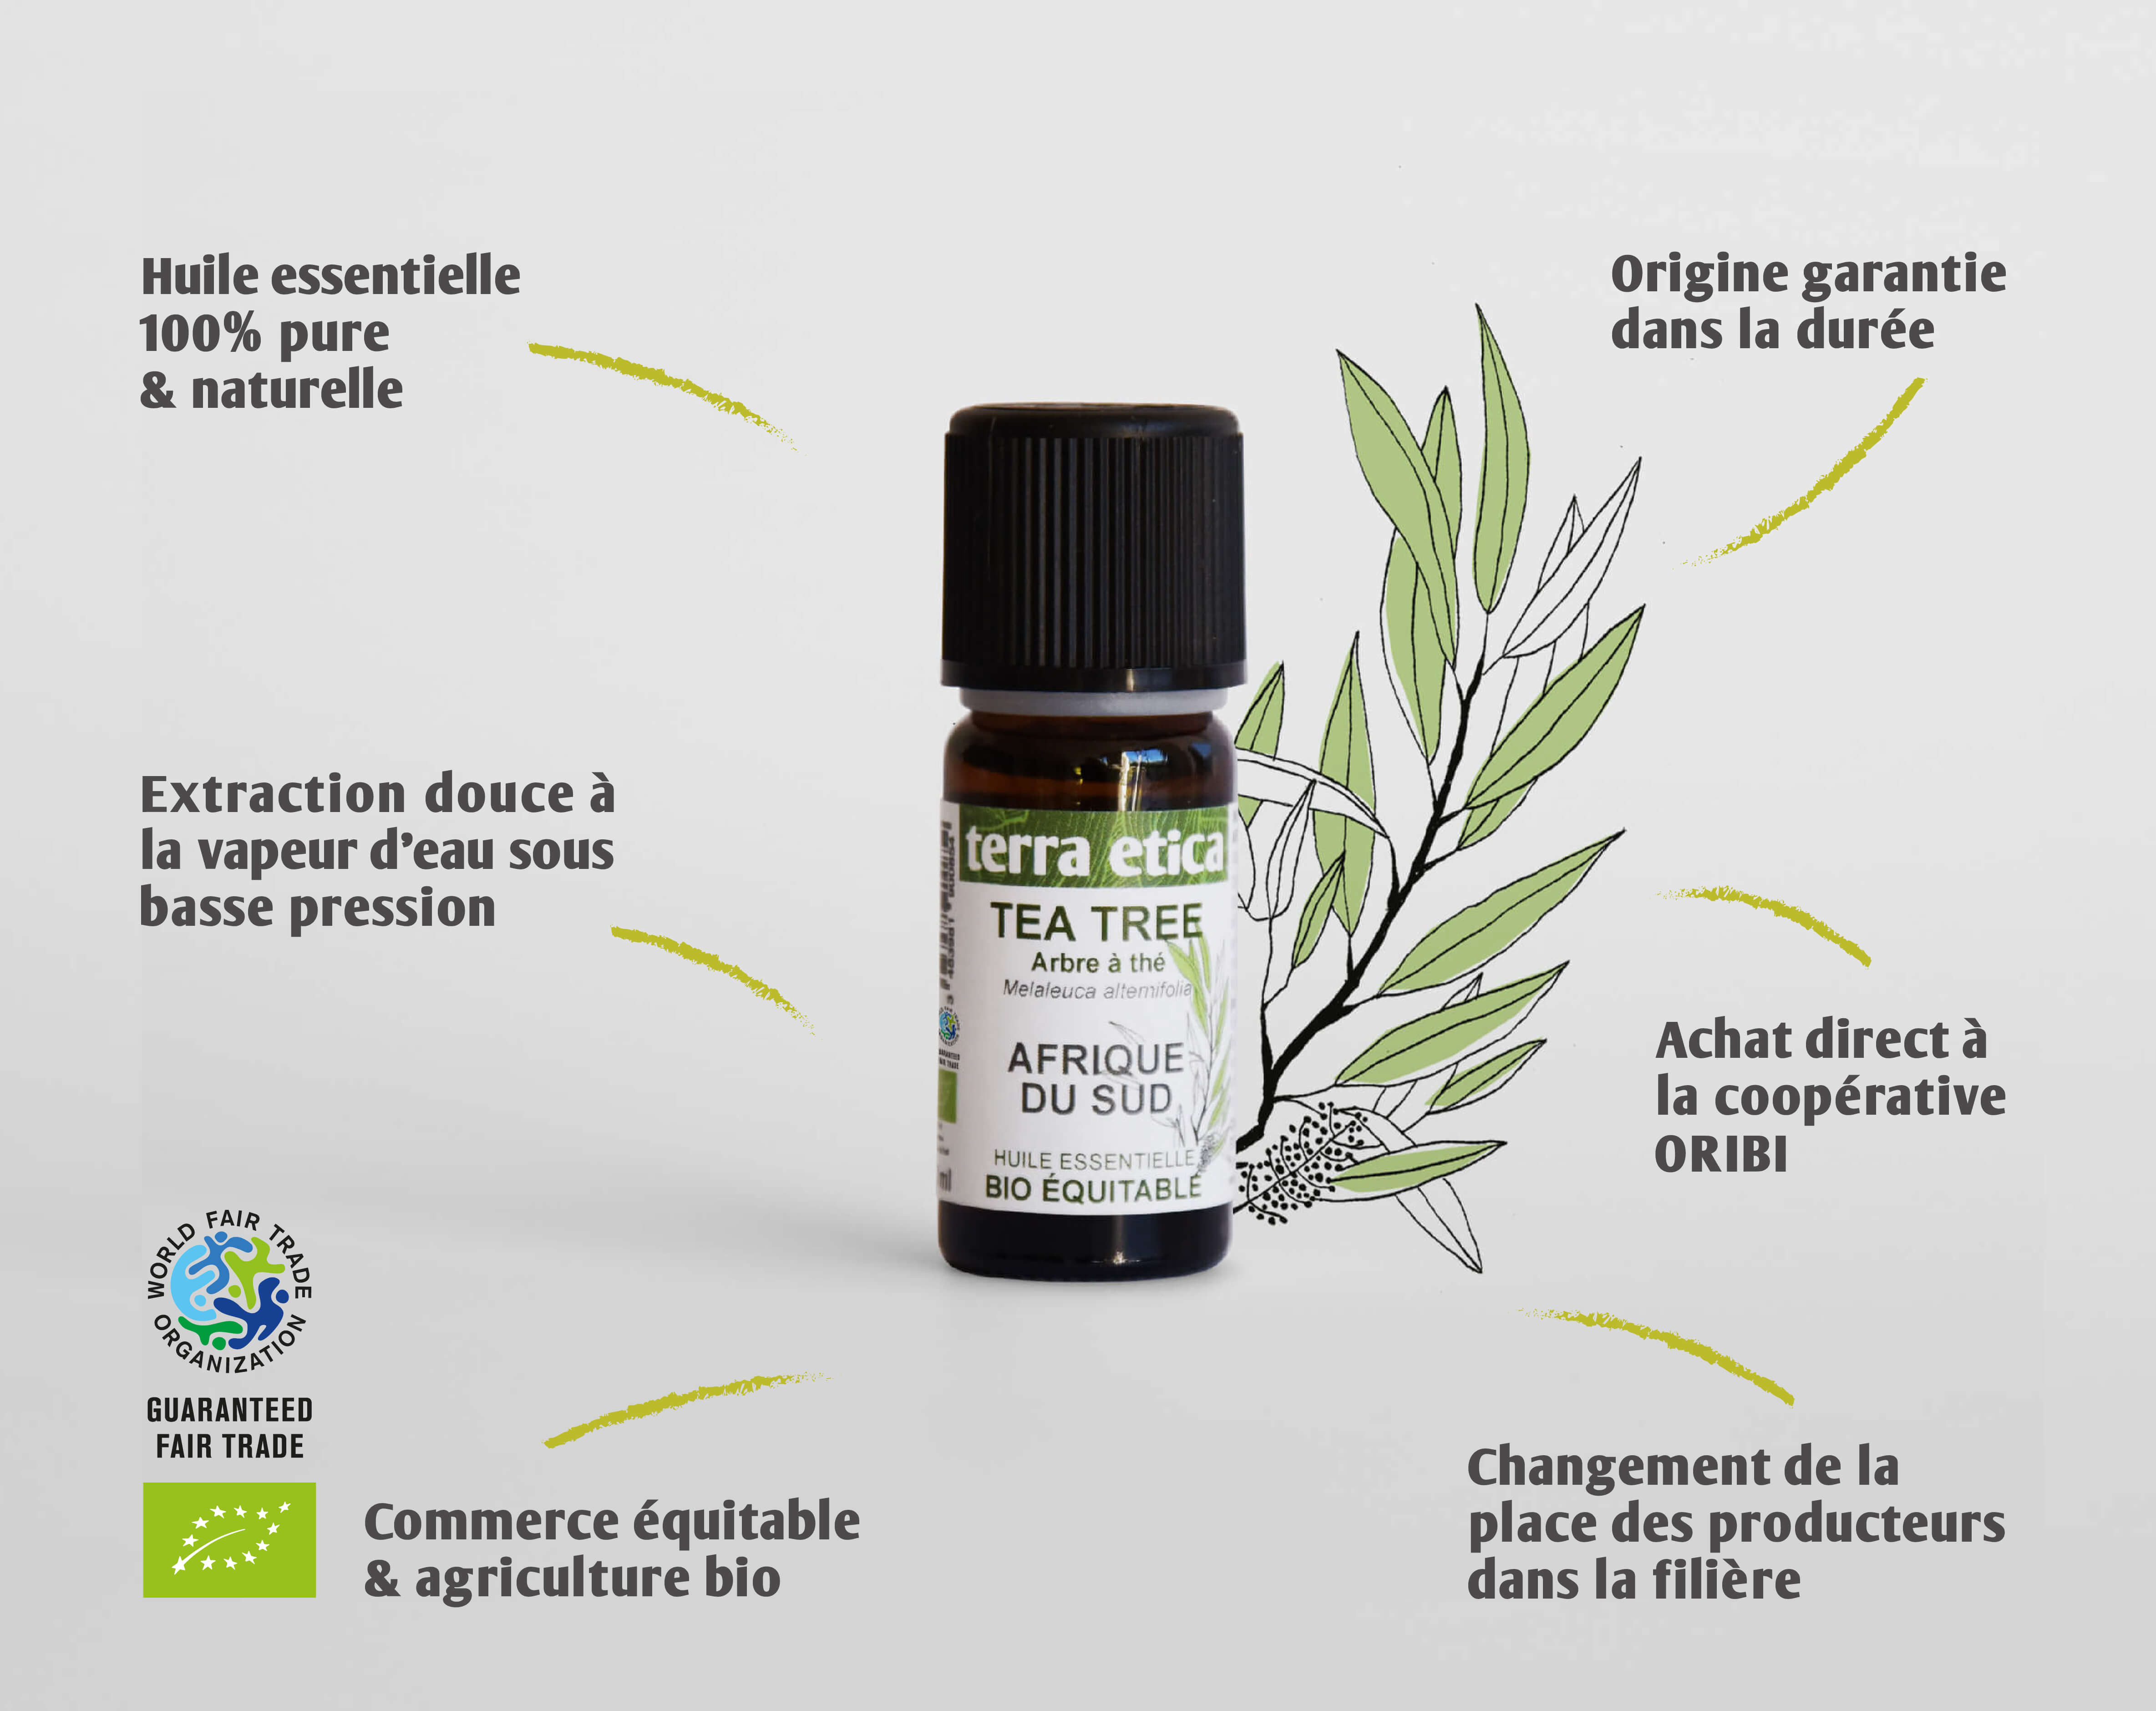 Pure huile essentielle Tea tree biologique et équitable I Terra Etica